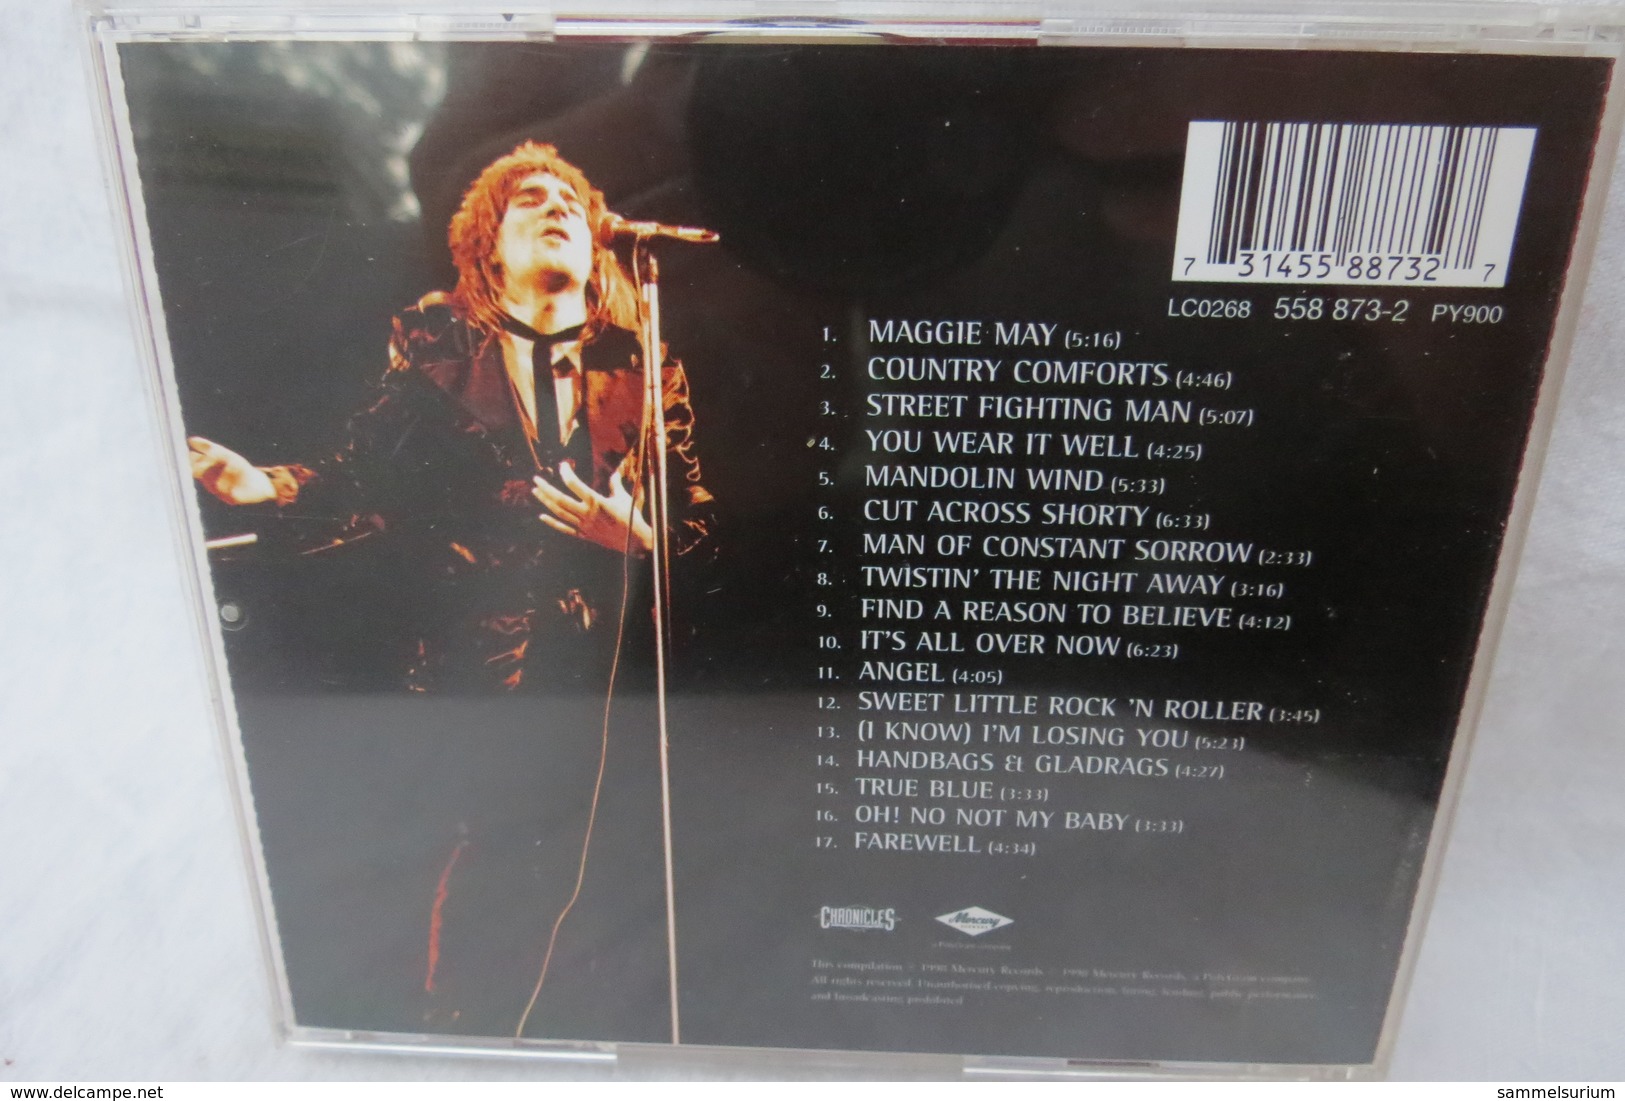 CD "Rod Stewart" The Very Best Of Rod Stewart - Disco, Pop